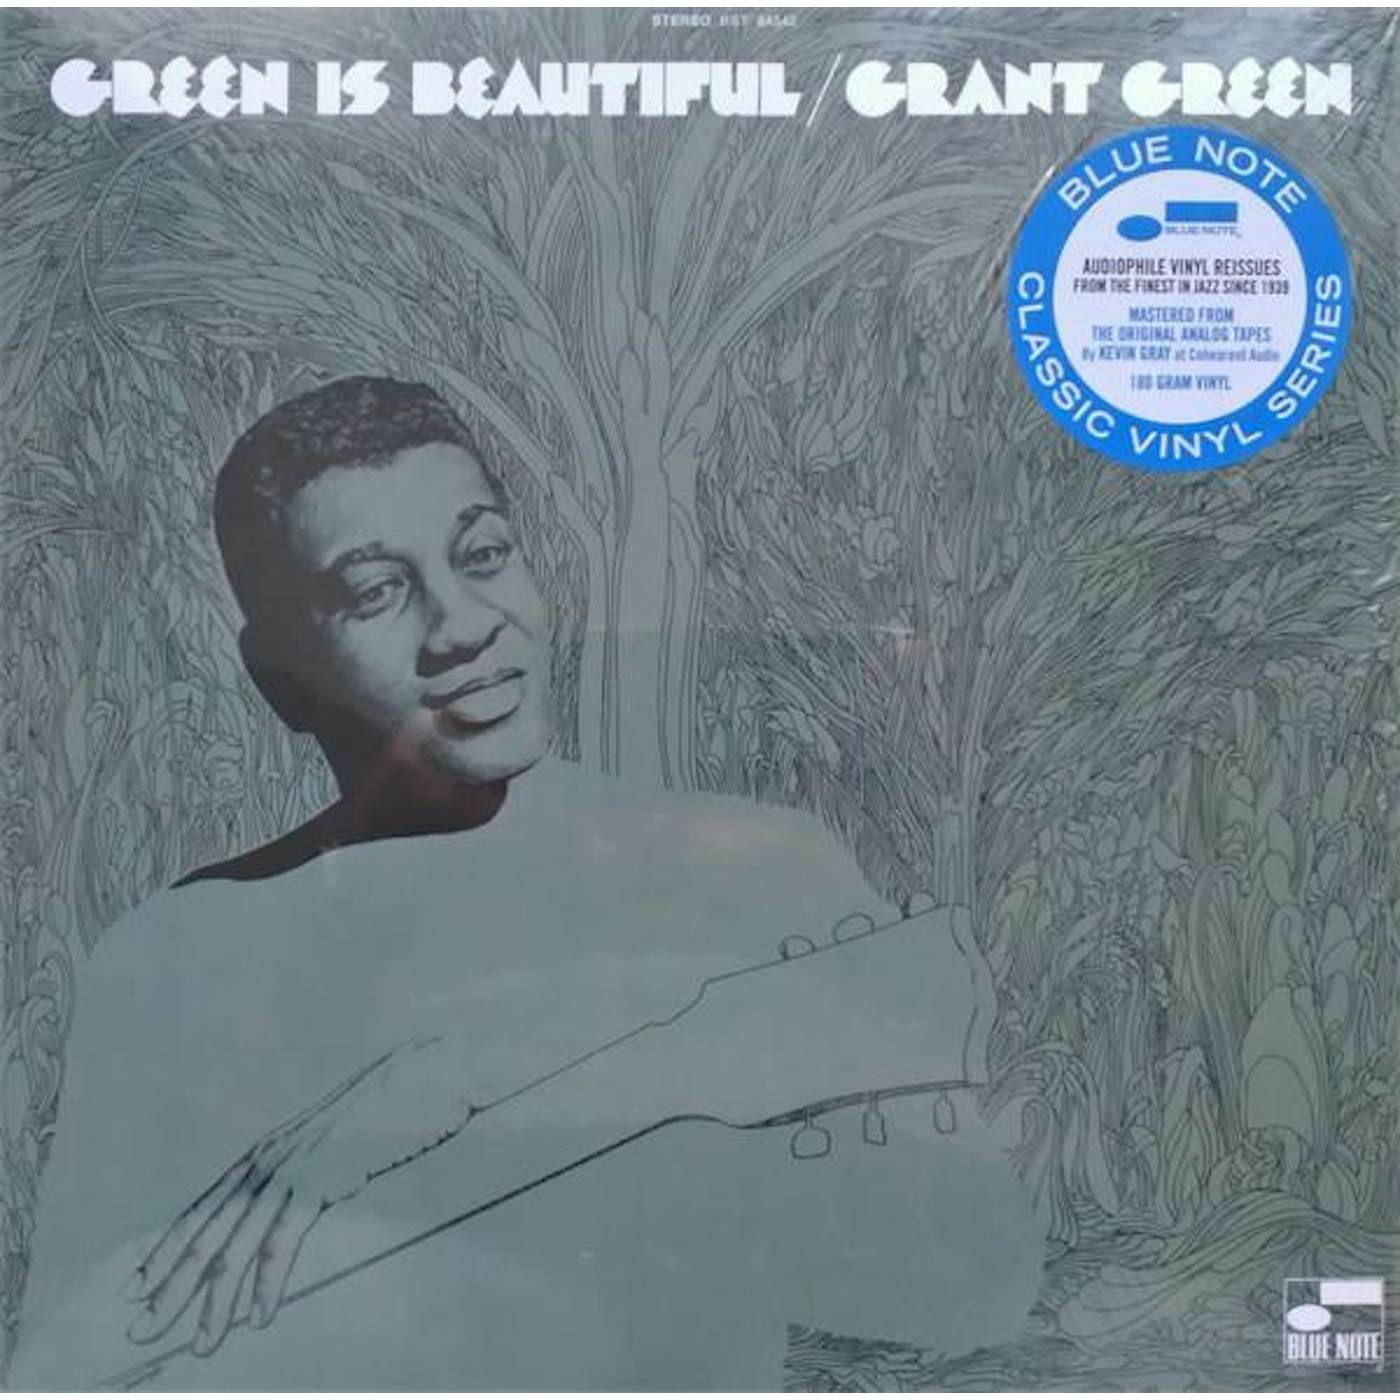 Grant Green GREEN IS BEAUTIFUL (BLUE NOTE CLASSIC VINYL SERIES) Vinyl Record